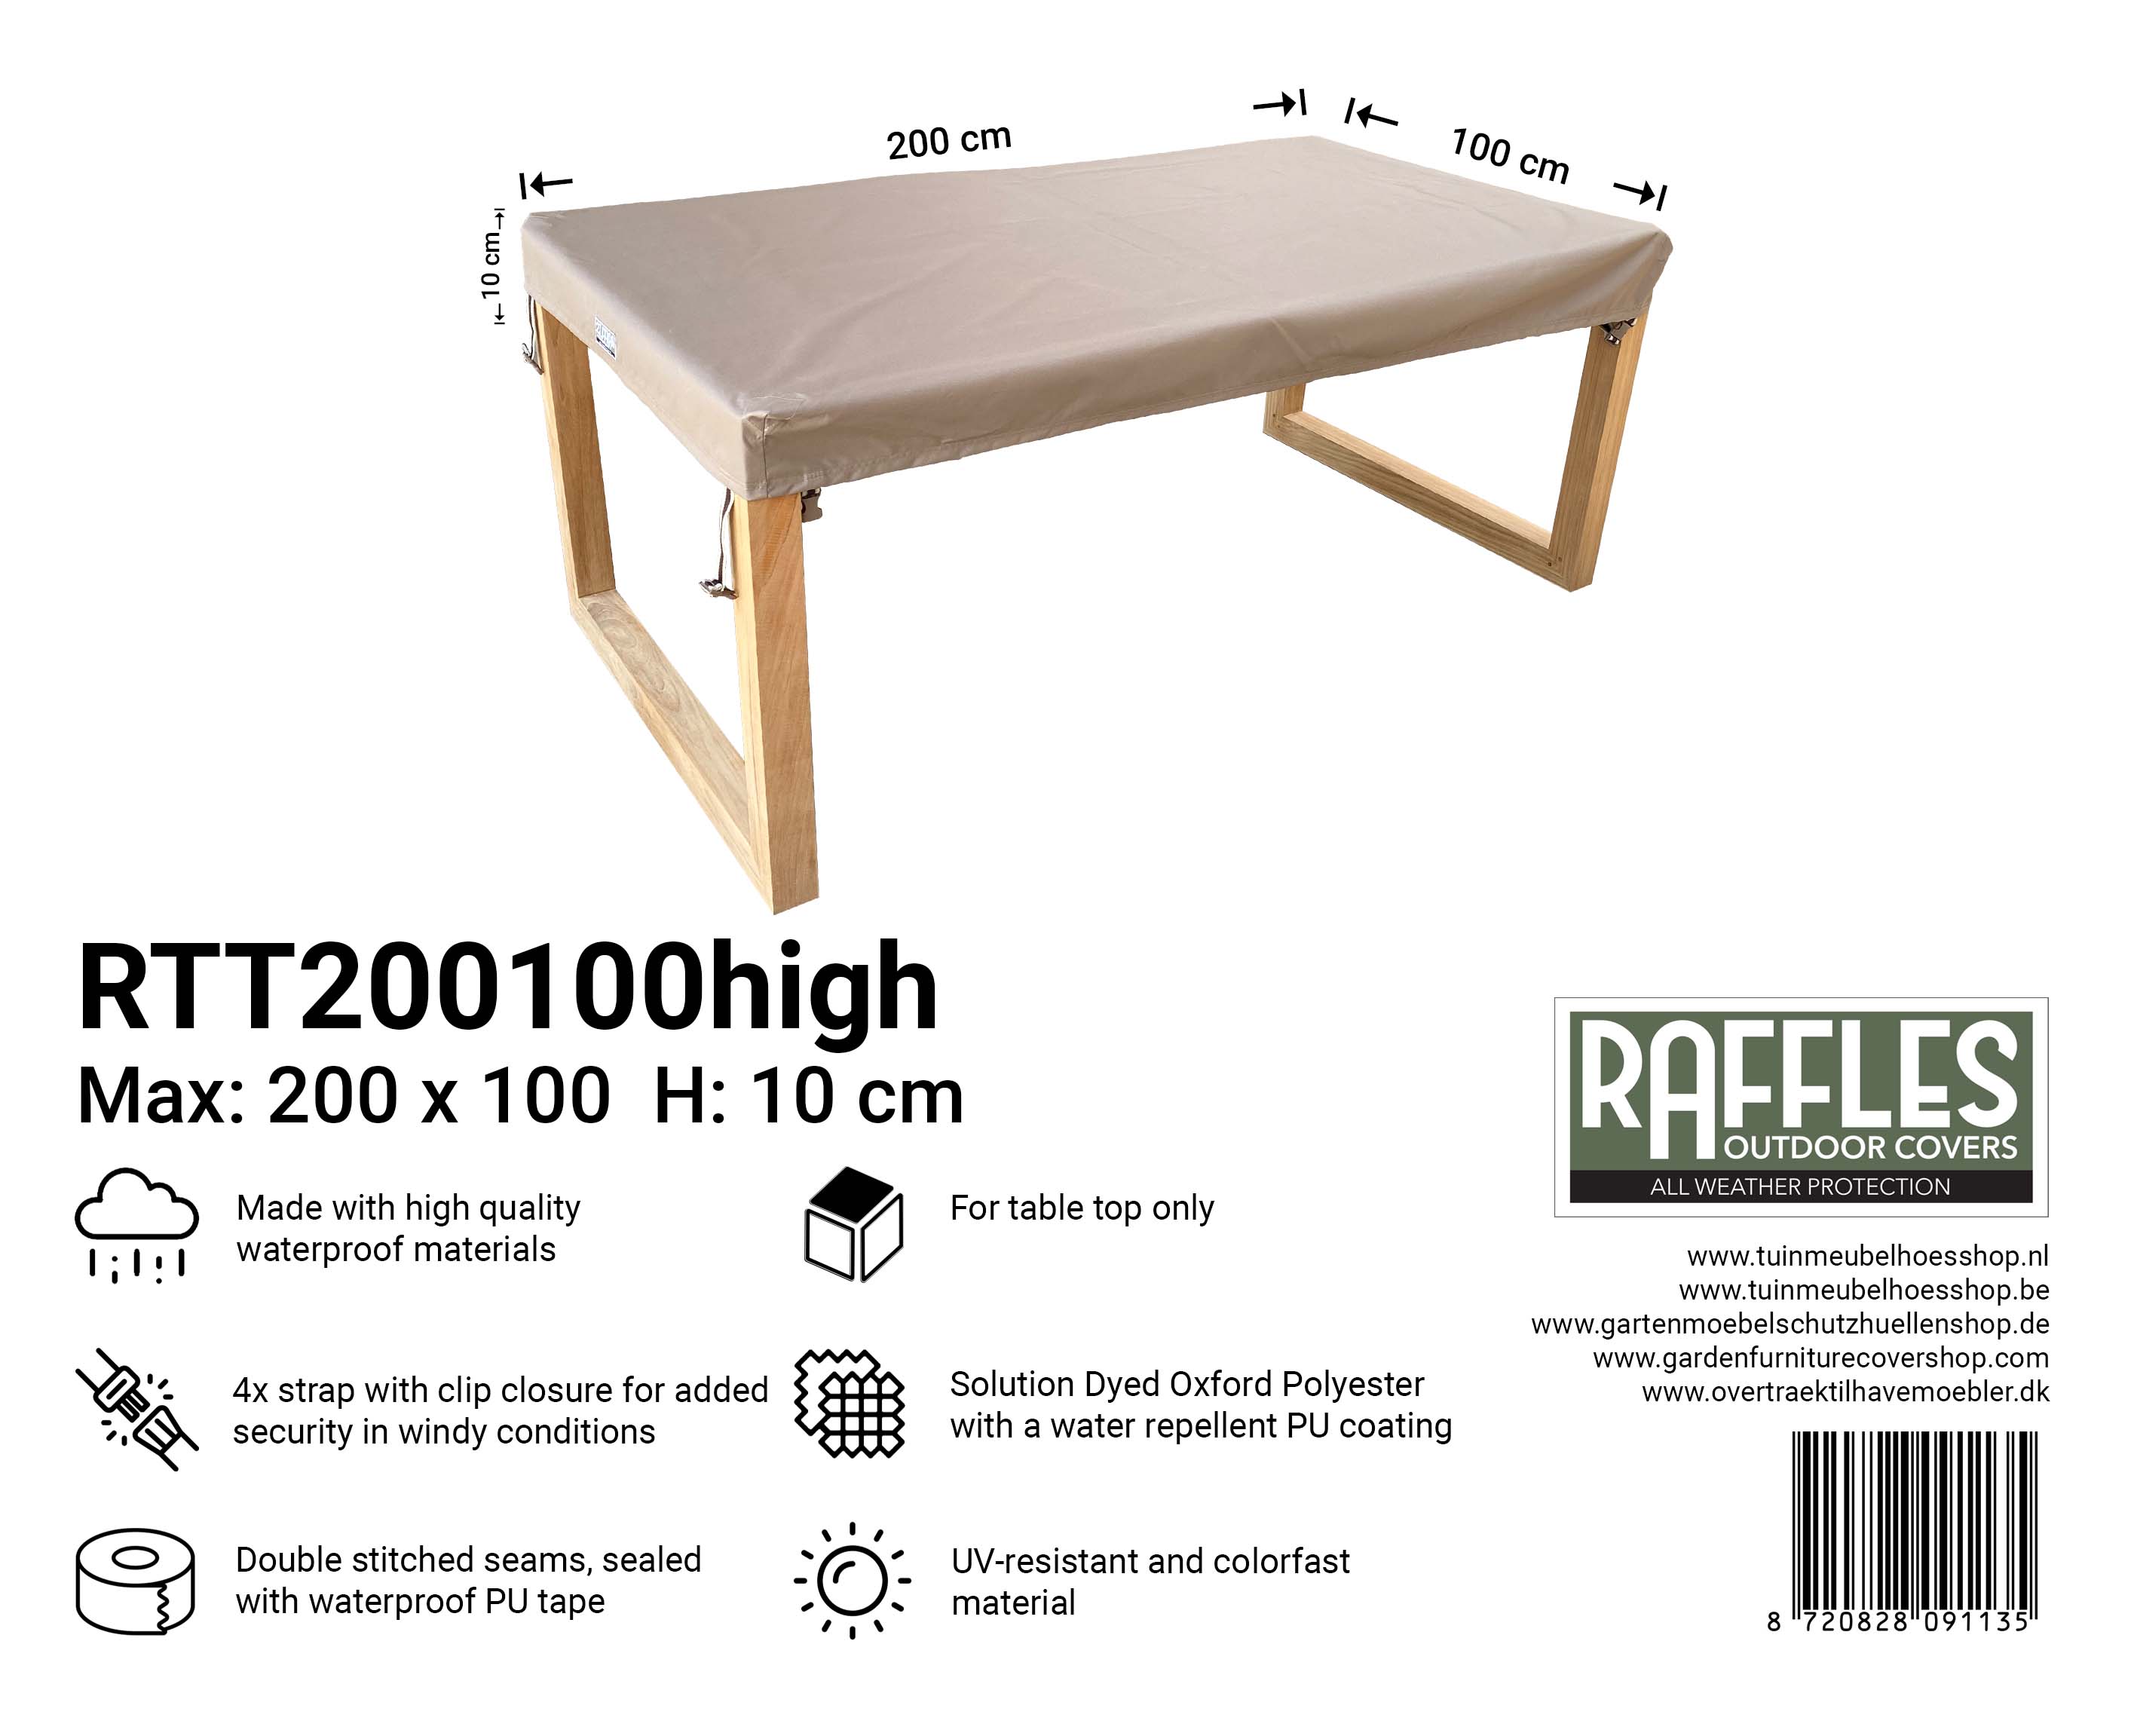 RTT200100high hoes tafelblad hoog 200 x 100 H: 10 cm